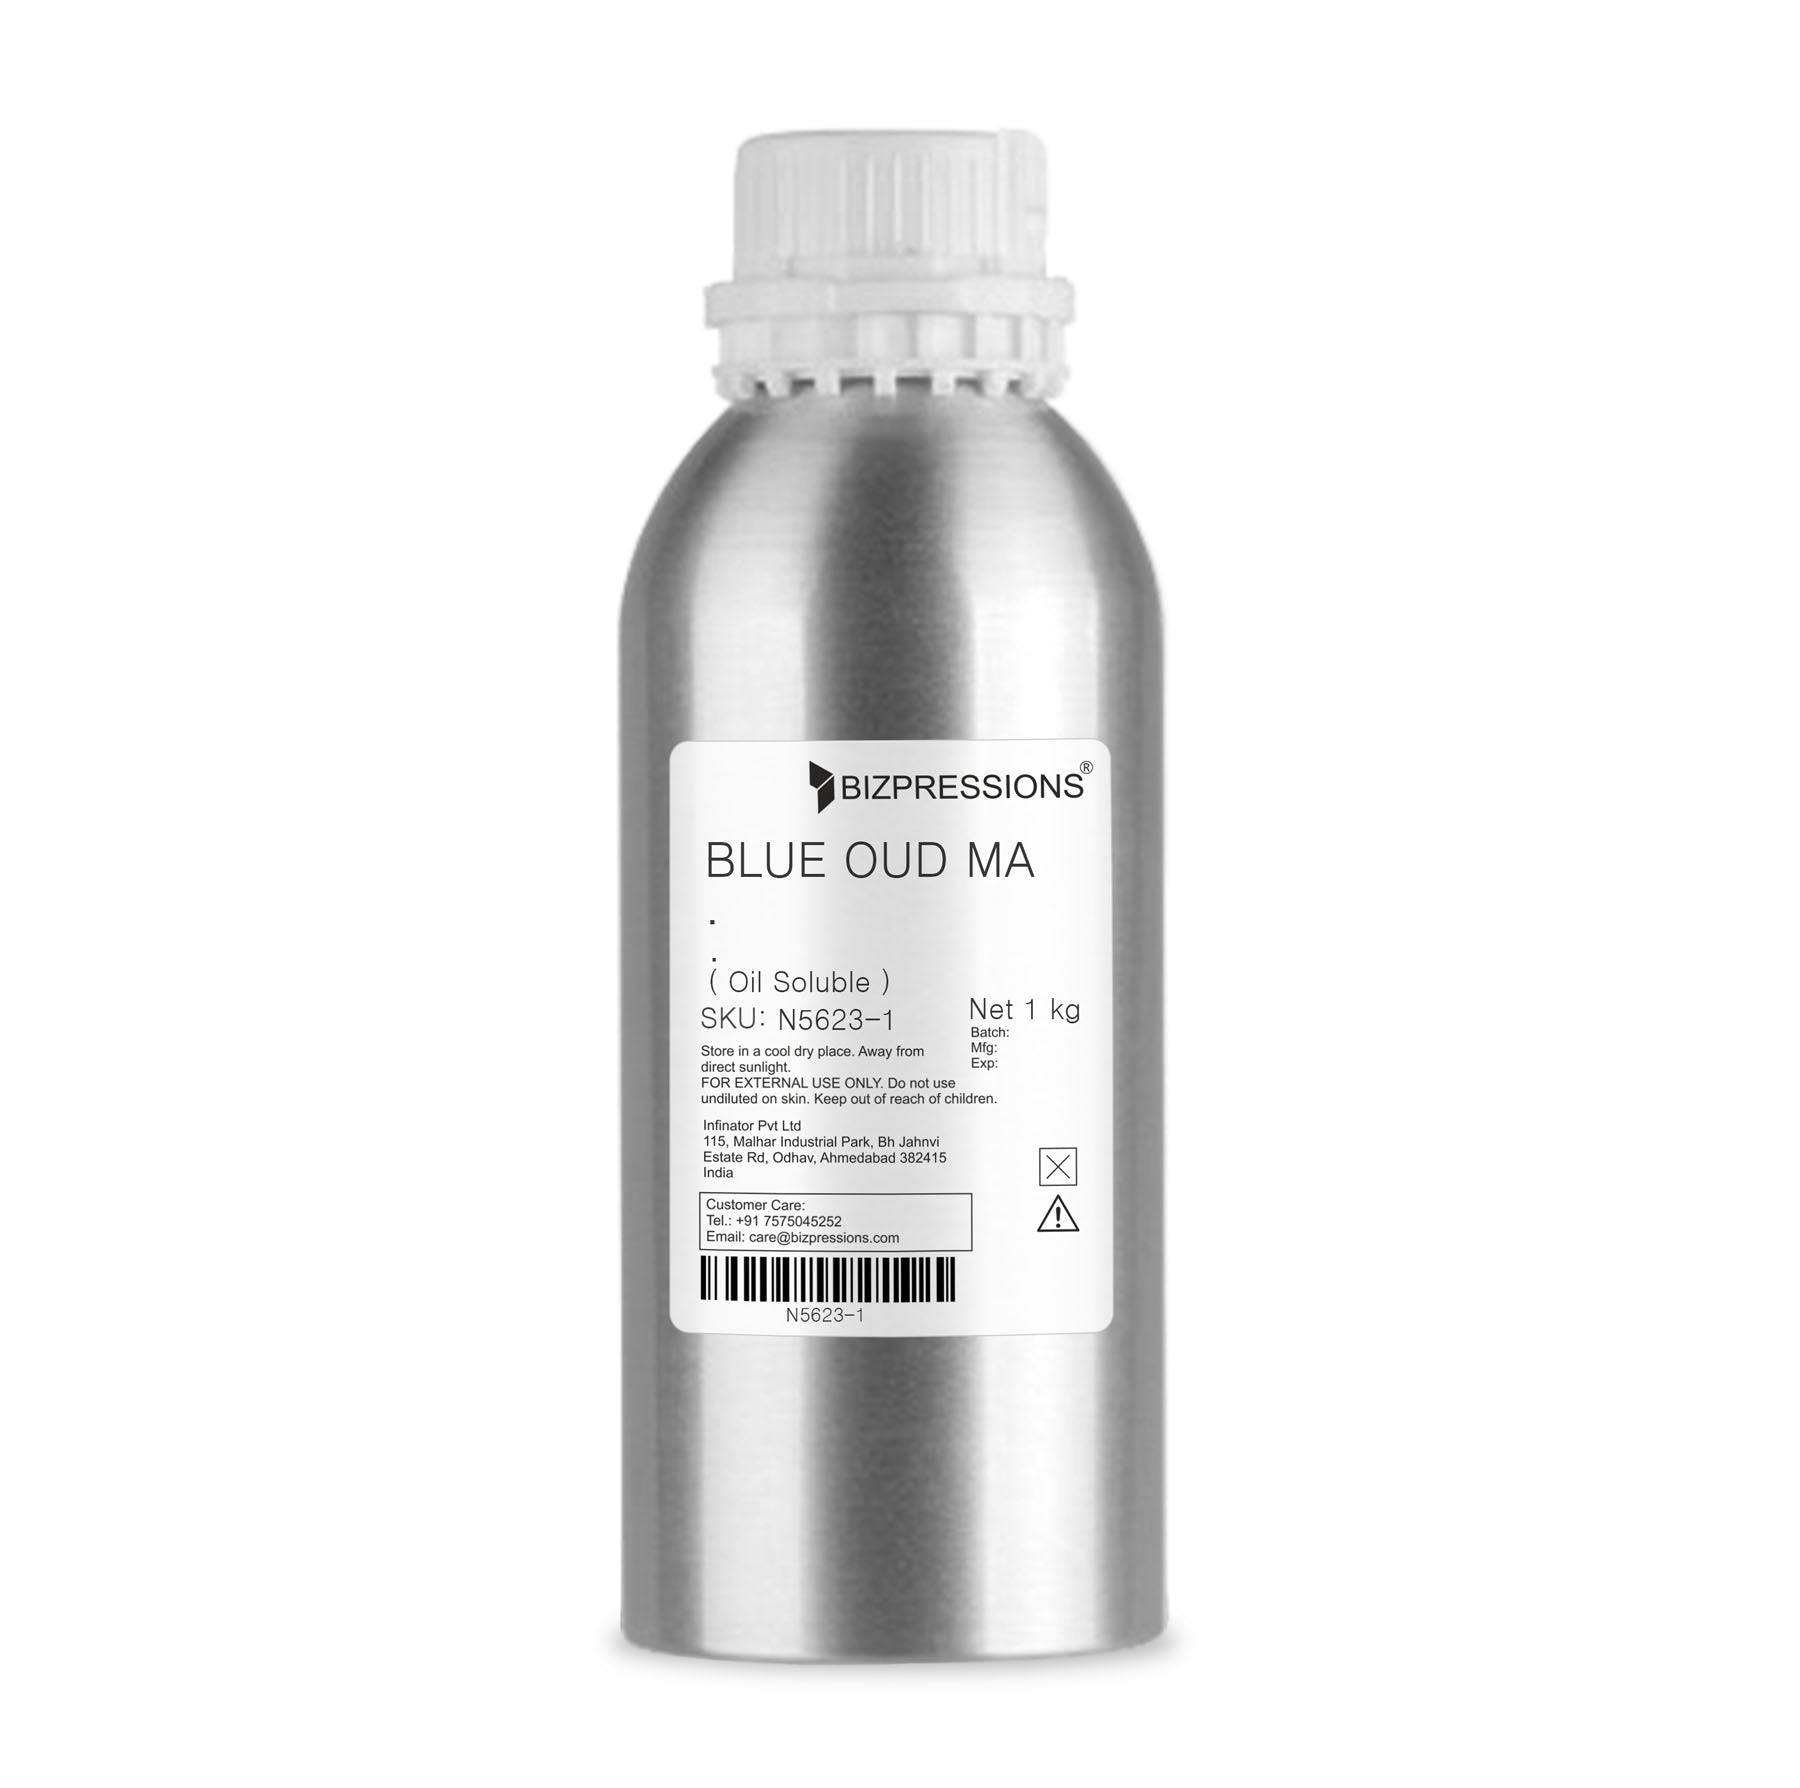 BLUE OUD MA - Fragrance ( Oil Soluble ) - 1 kg